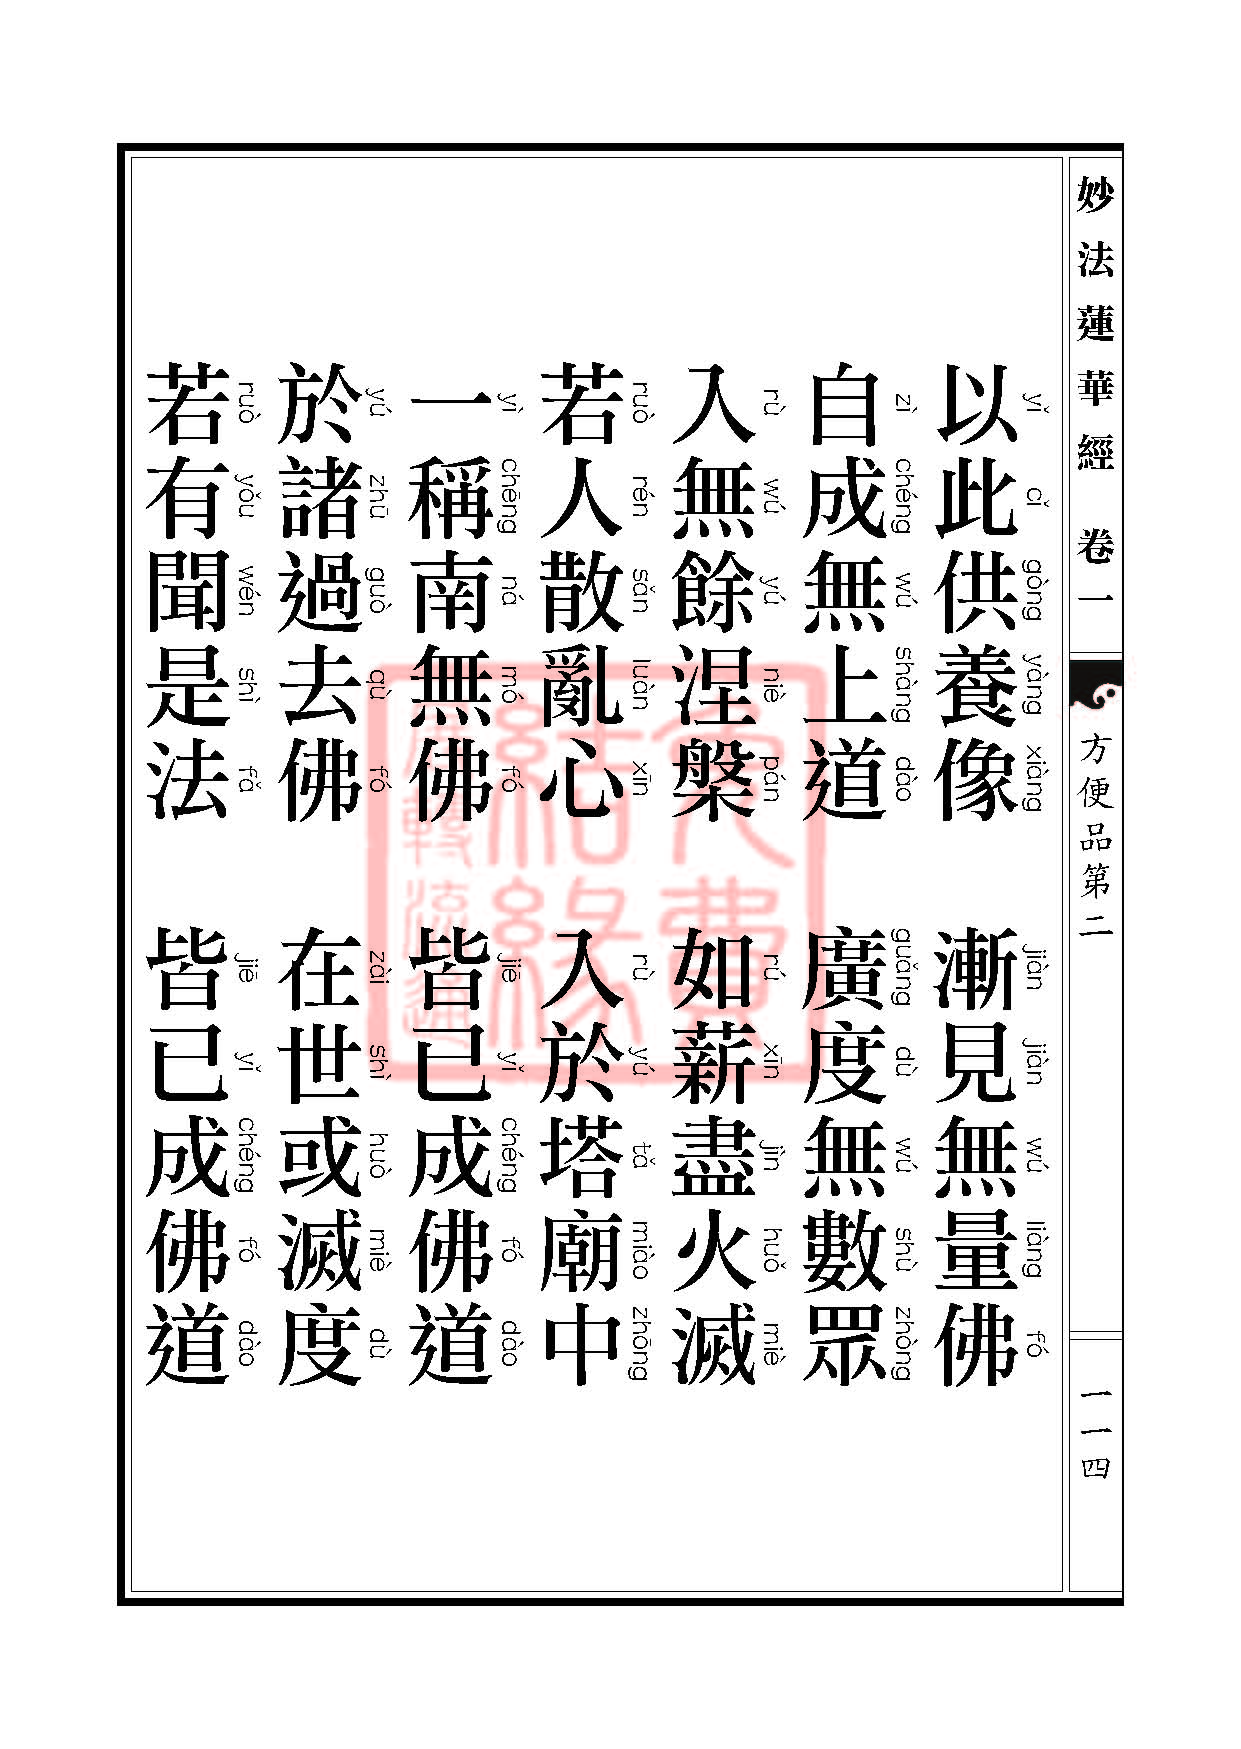 Book_FHJ_HK-A6-PY_Web_ҳ_114.jpg